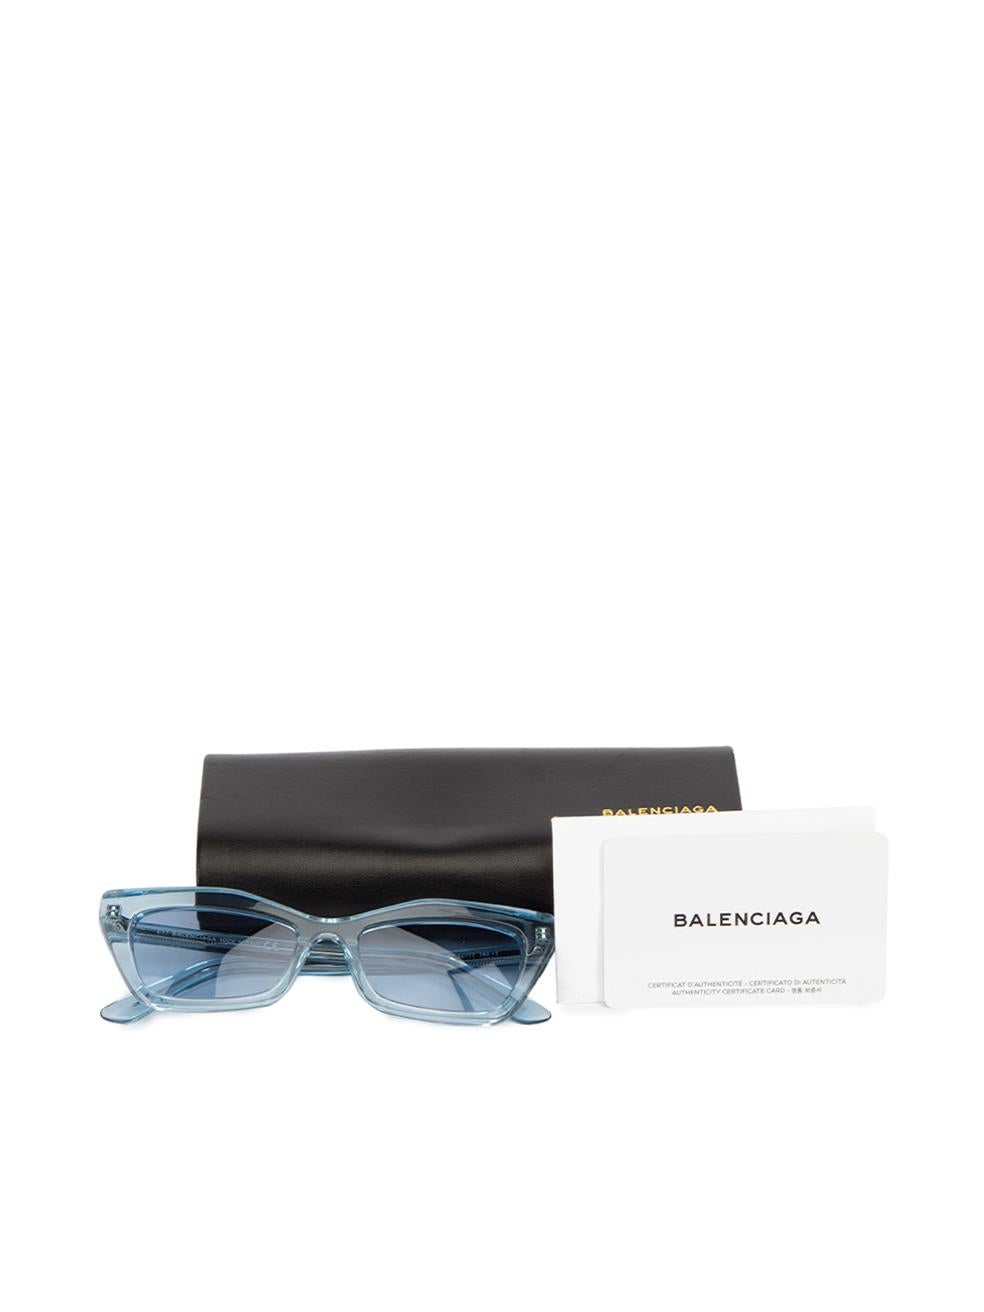 Pre-Loved Balenciaga Women's Blue Rectangular Framed Sunglasses 1